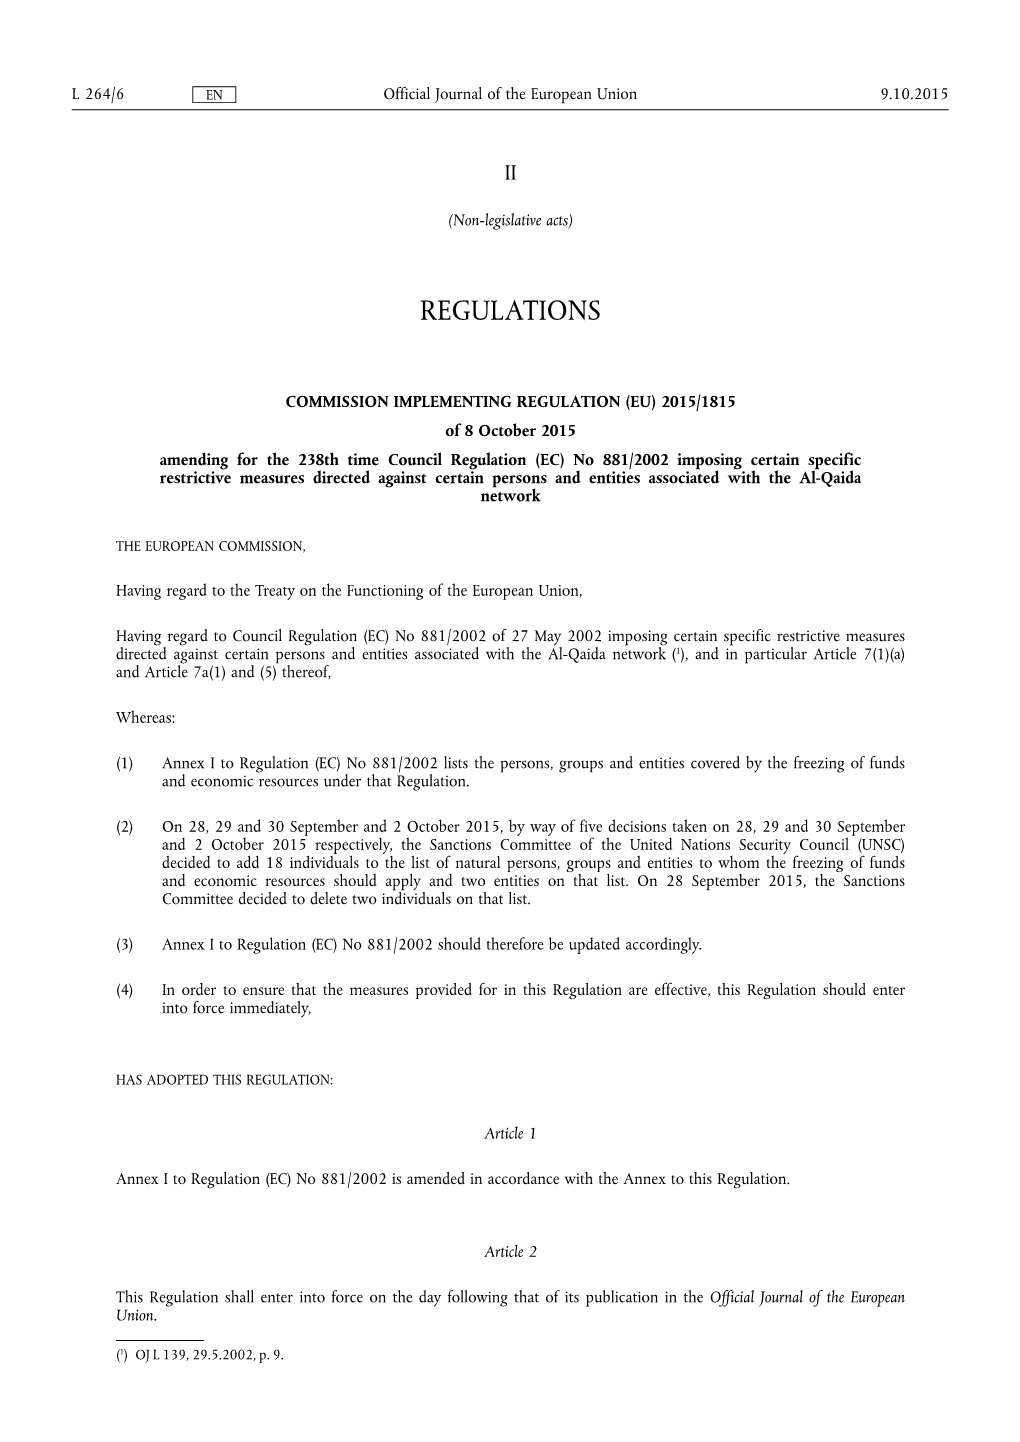 Commission Implementing Regulation (Eu) 2015/ 1815